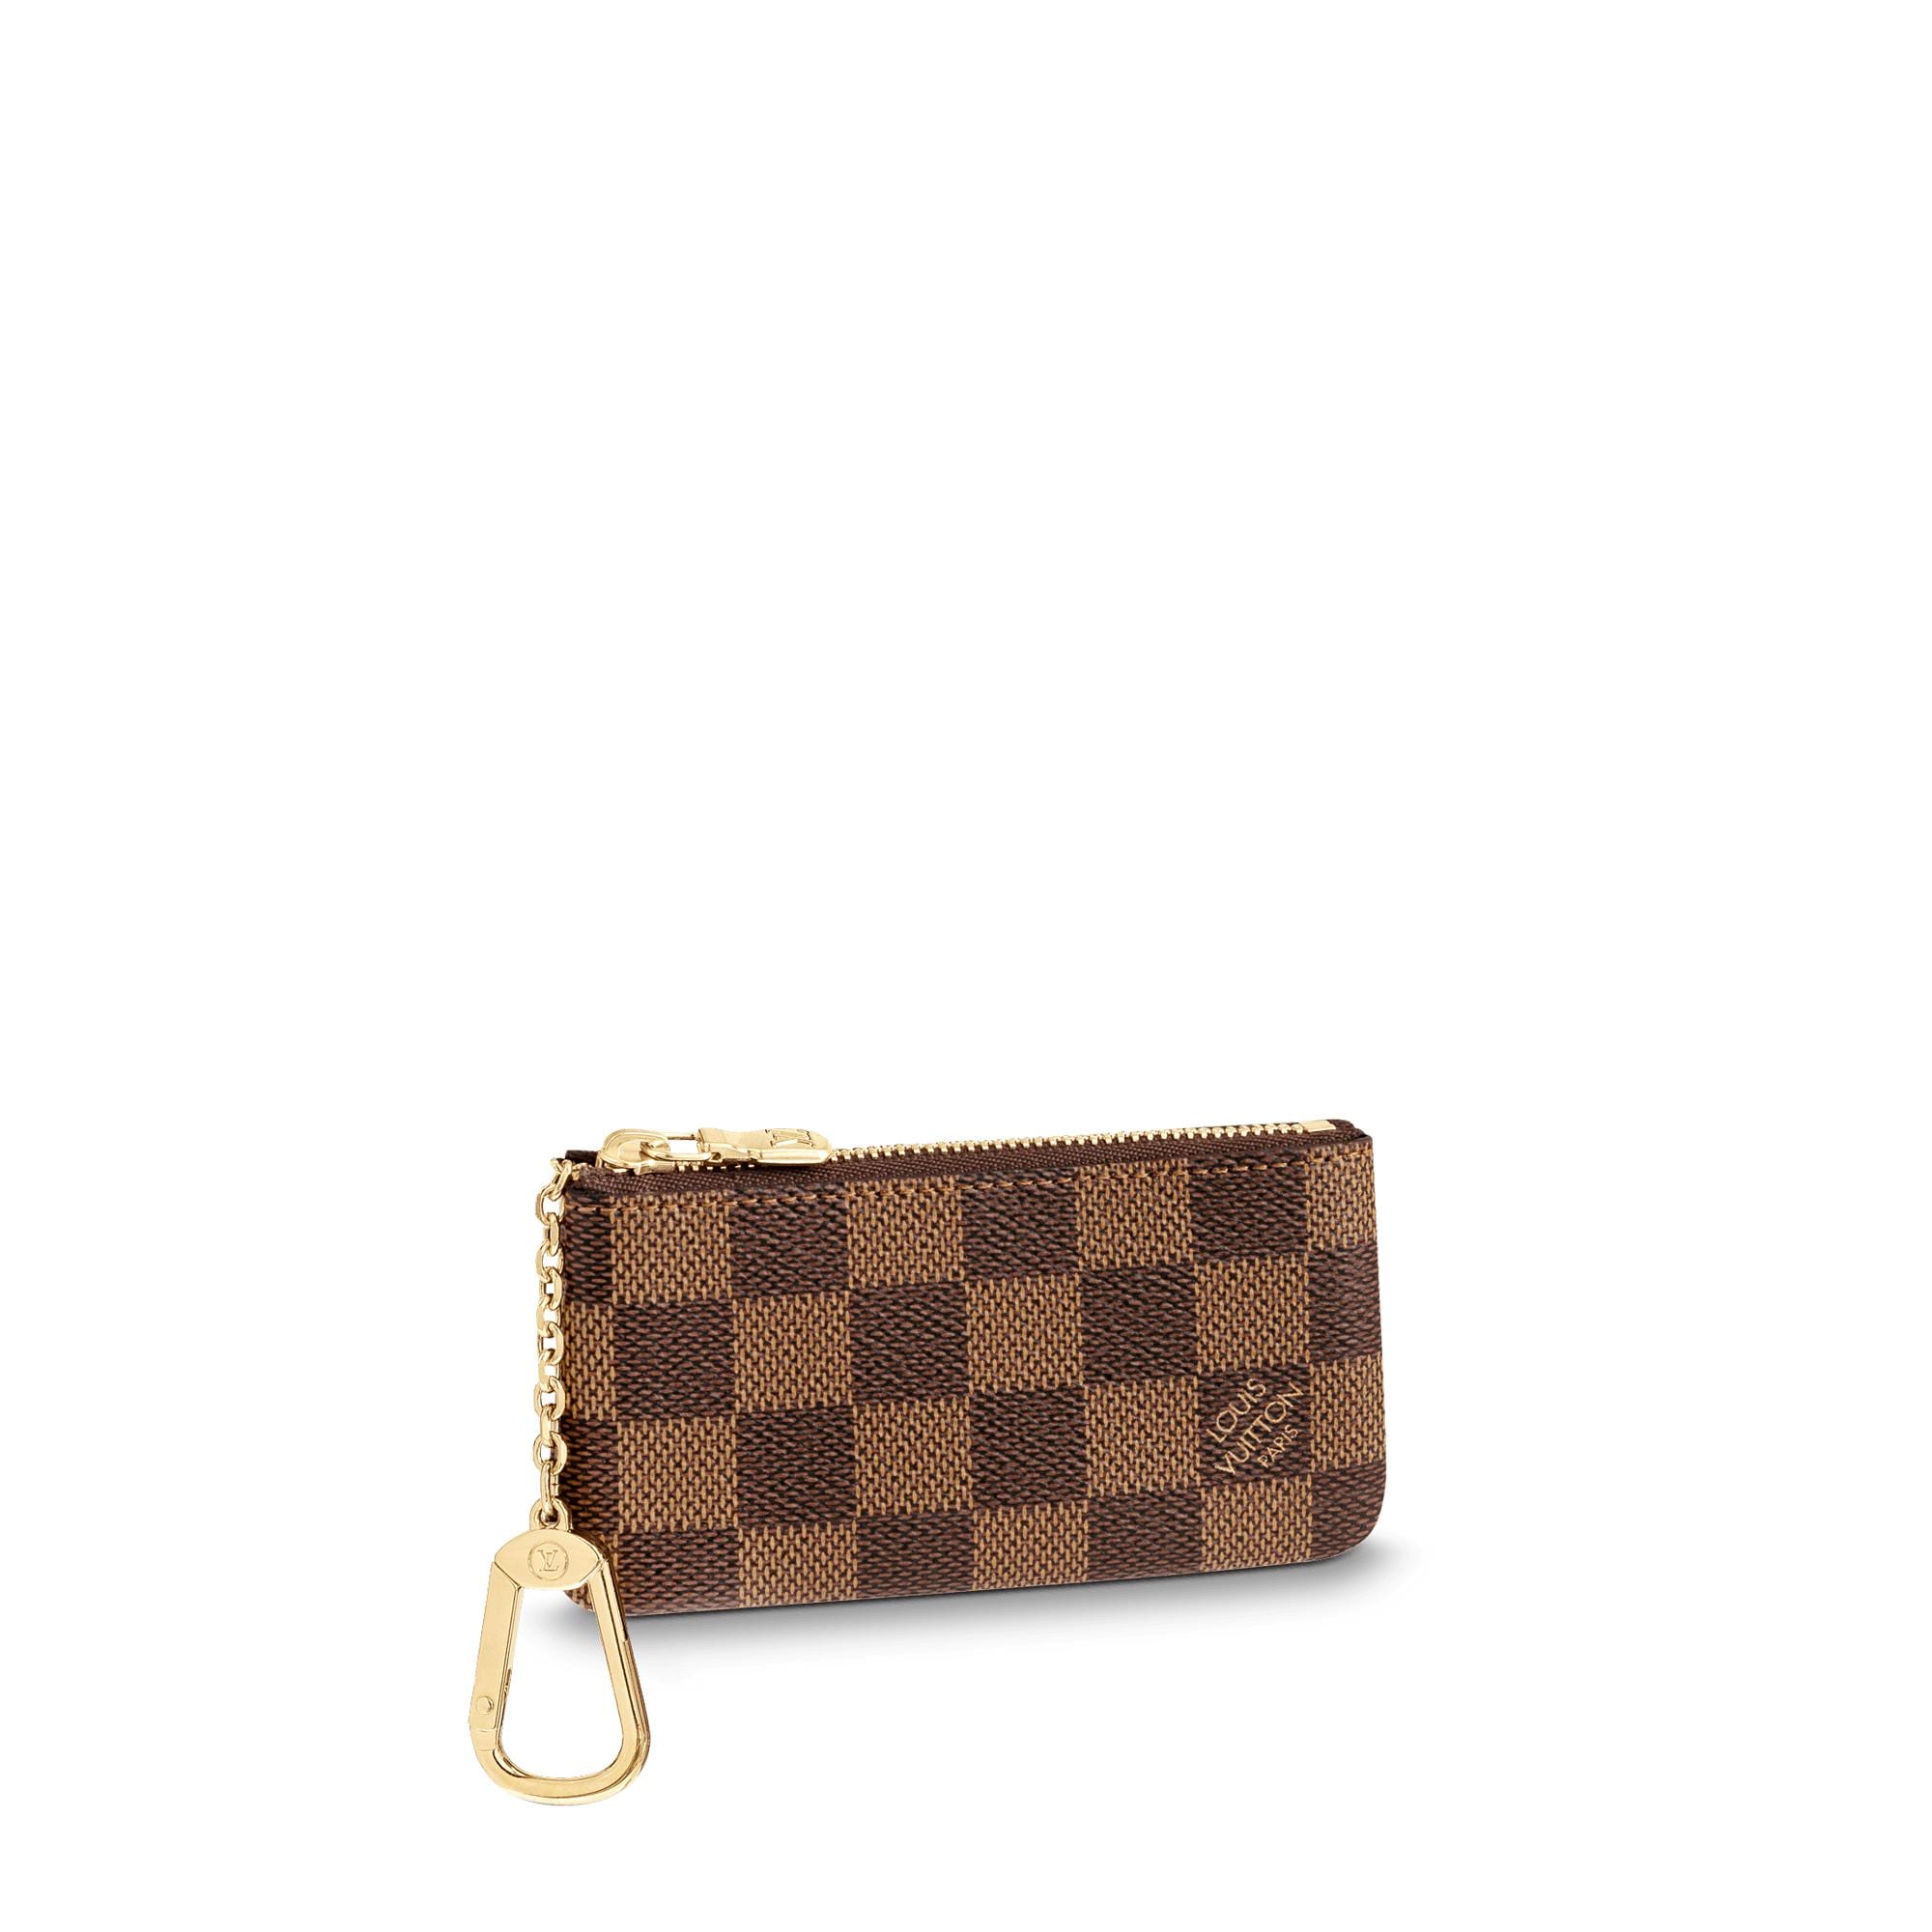 Louis Vuitton Key Pouch Damier Ebene in Brown – Accessories N62658